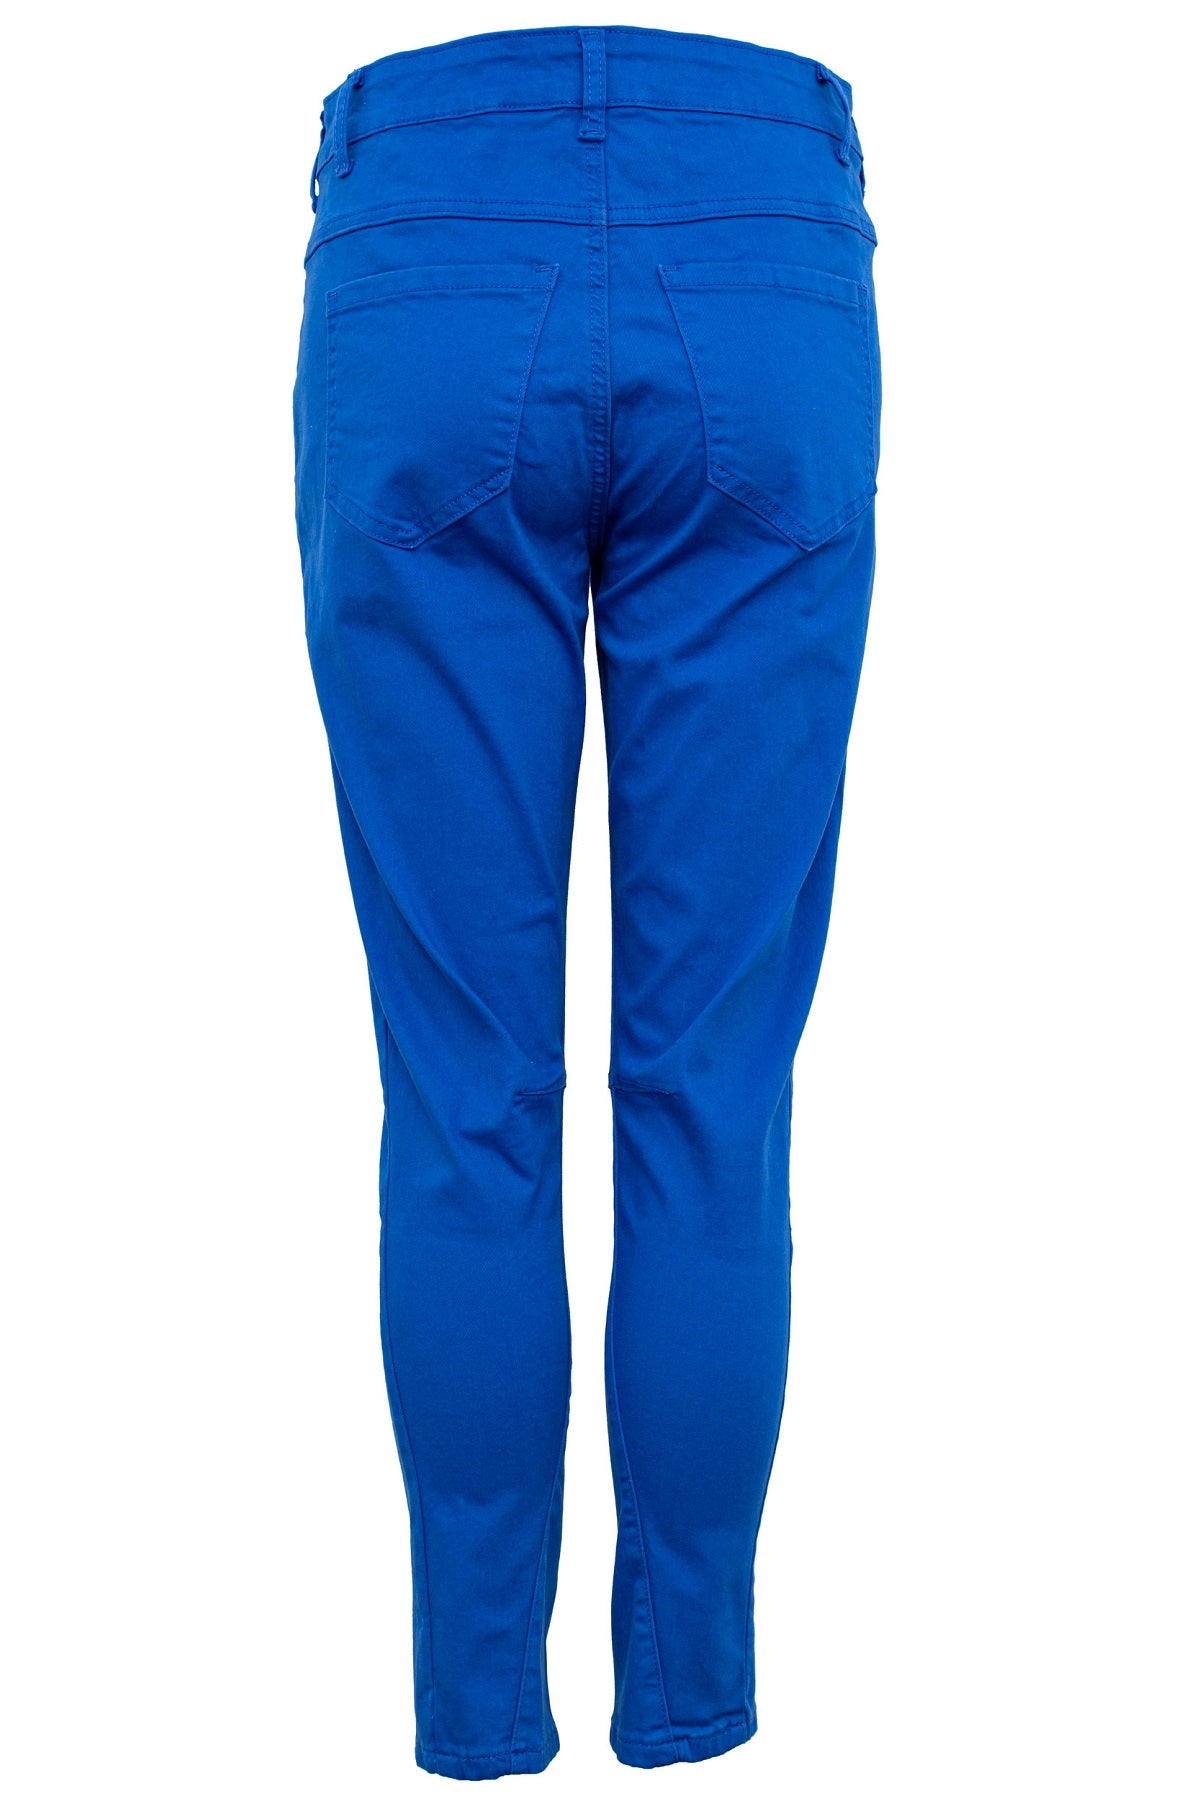 Costamani Capri Pants CMB401, Royal blue